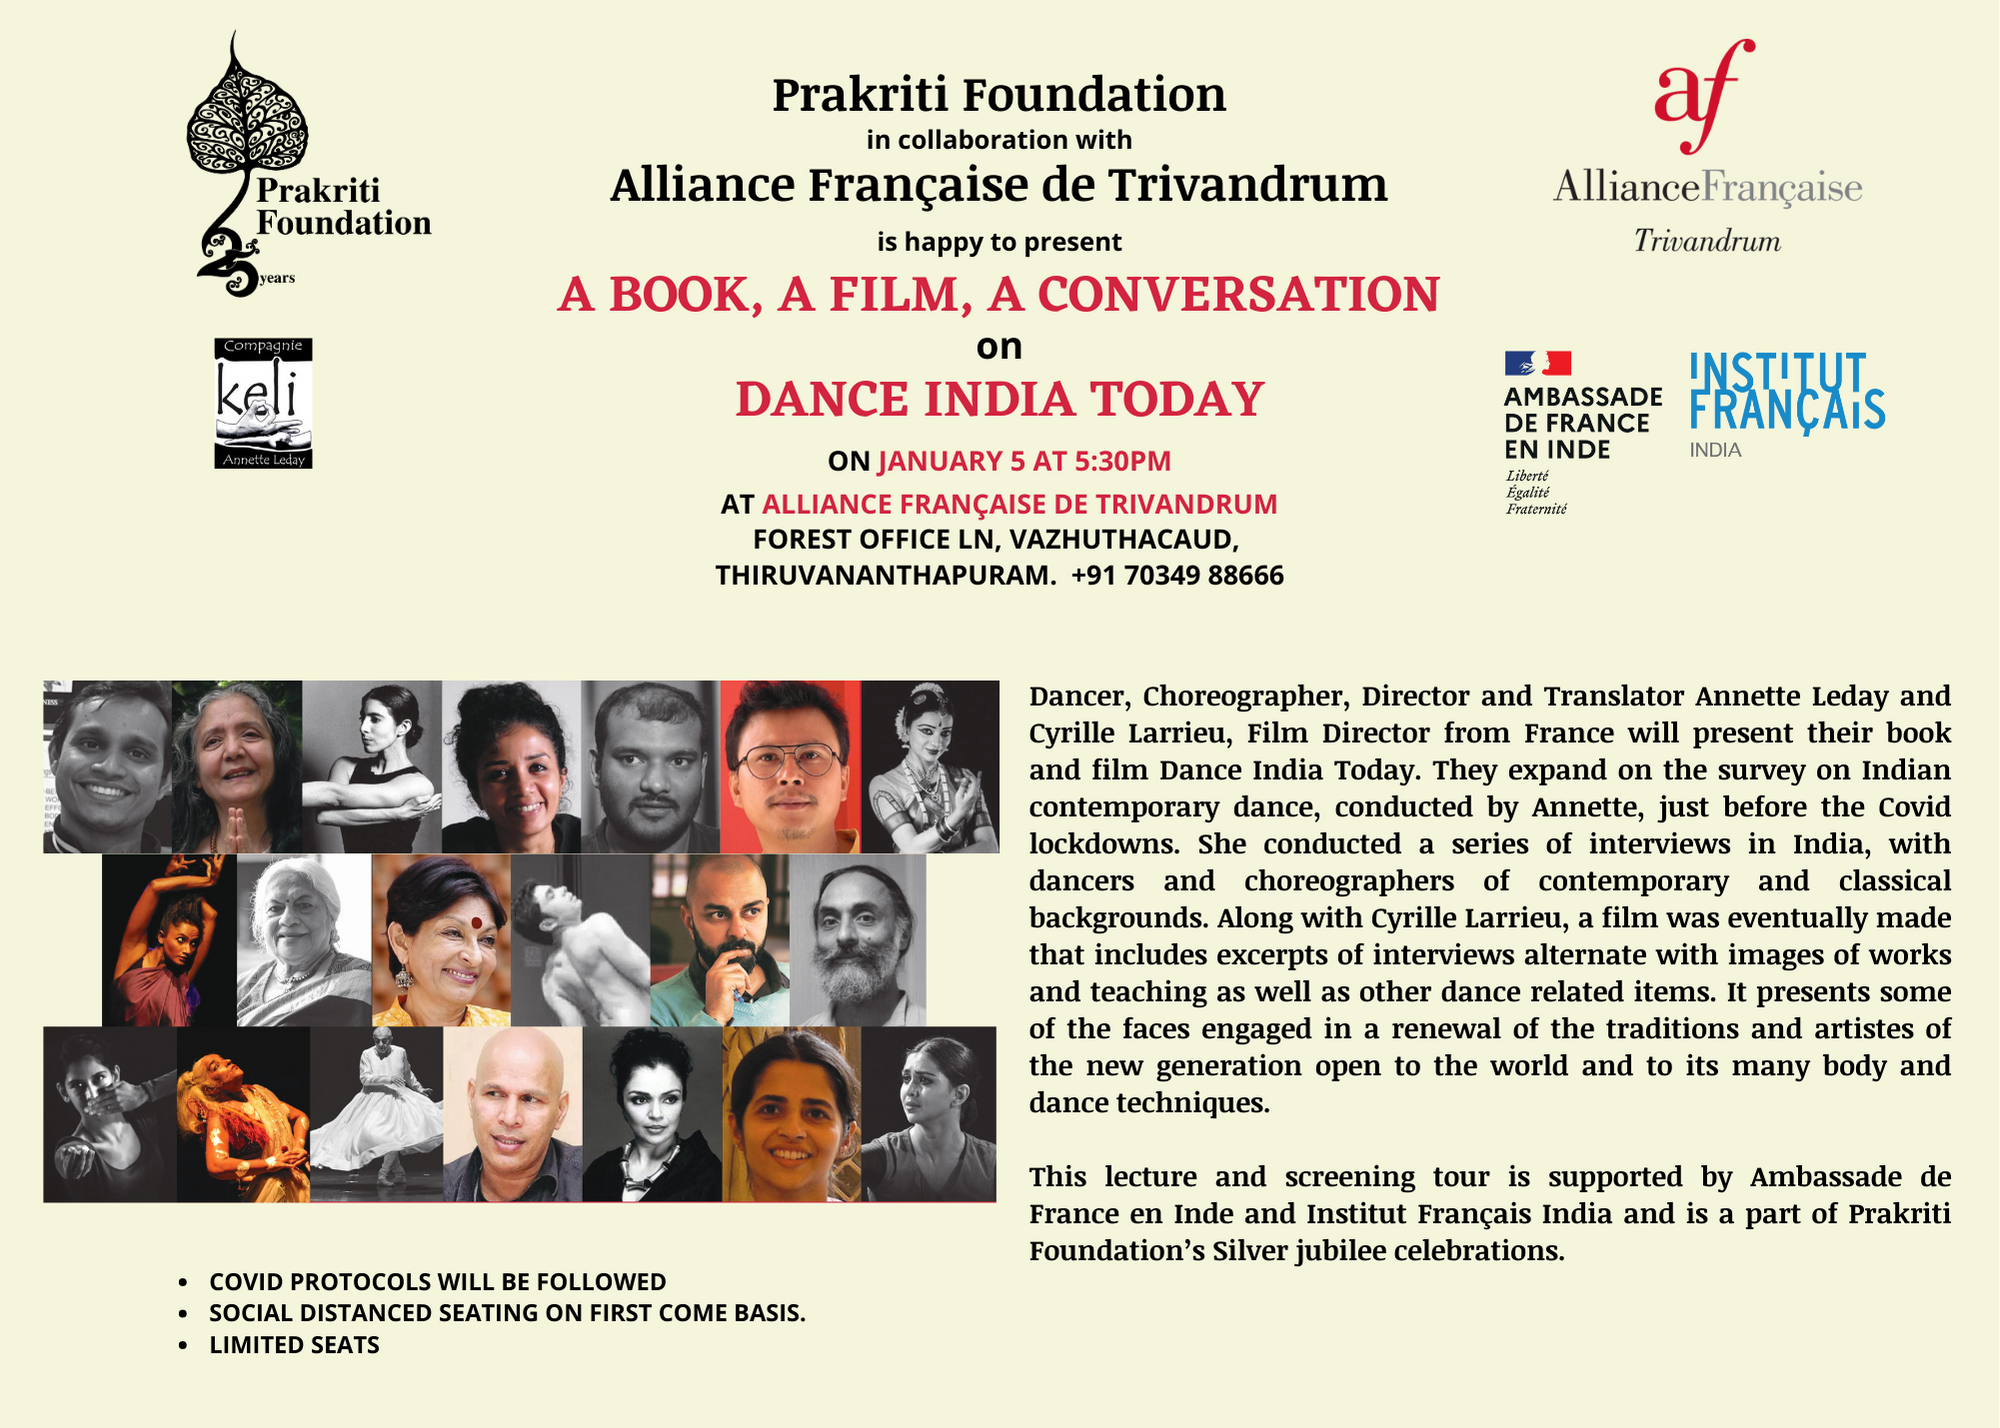 Dance India Today - A Book, a Film, a Conversation